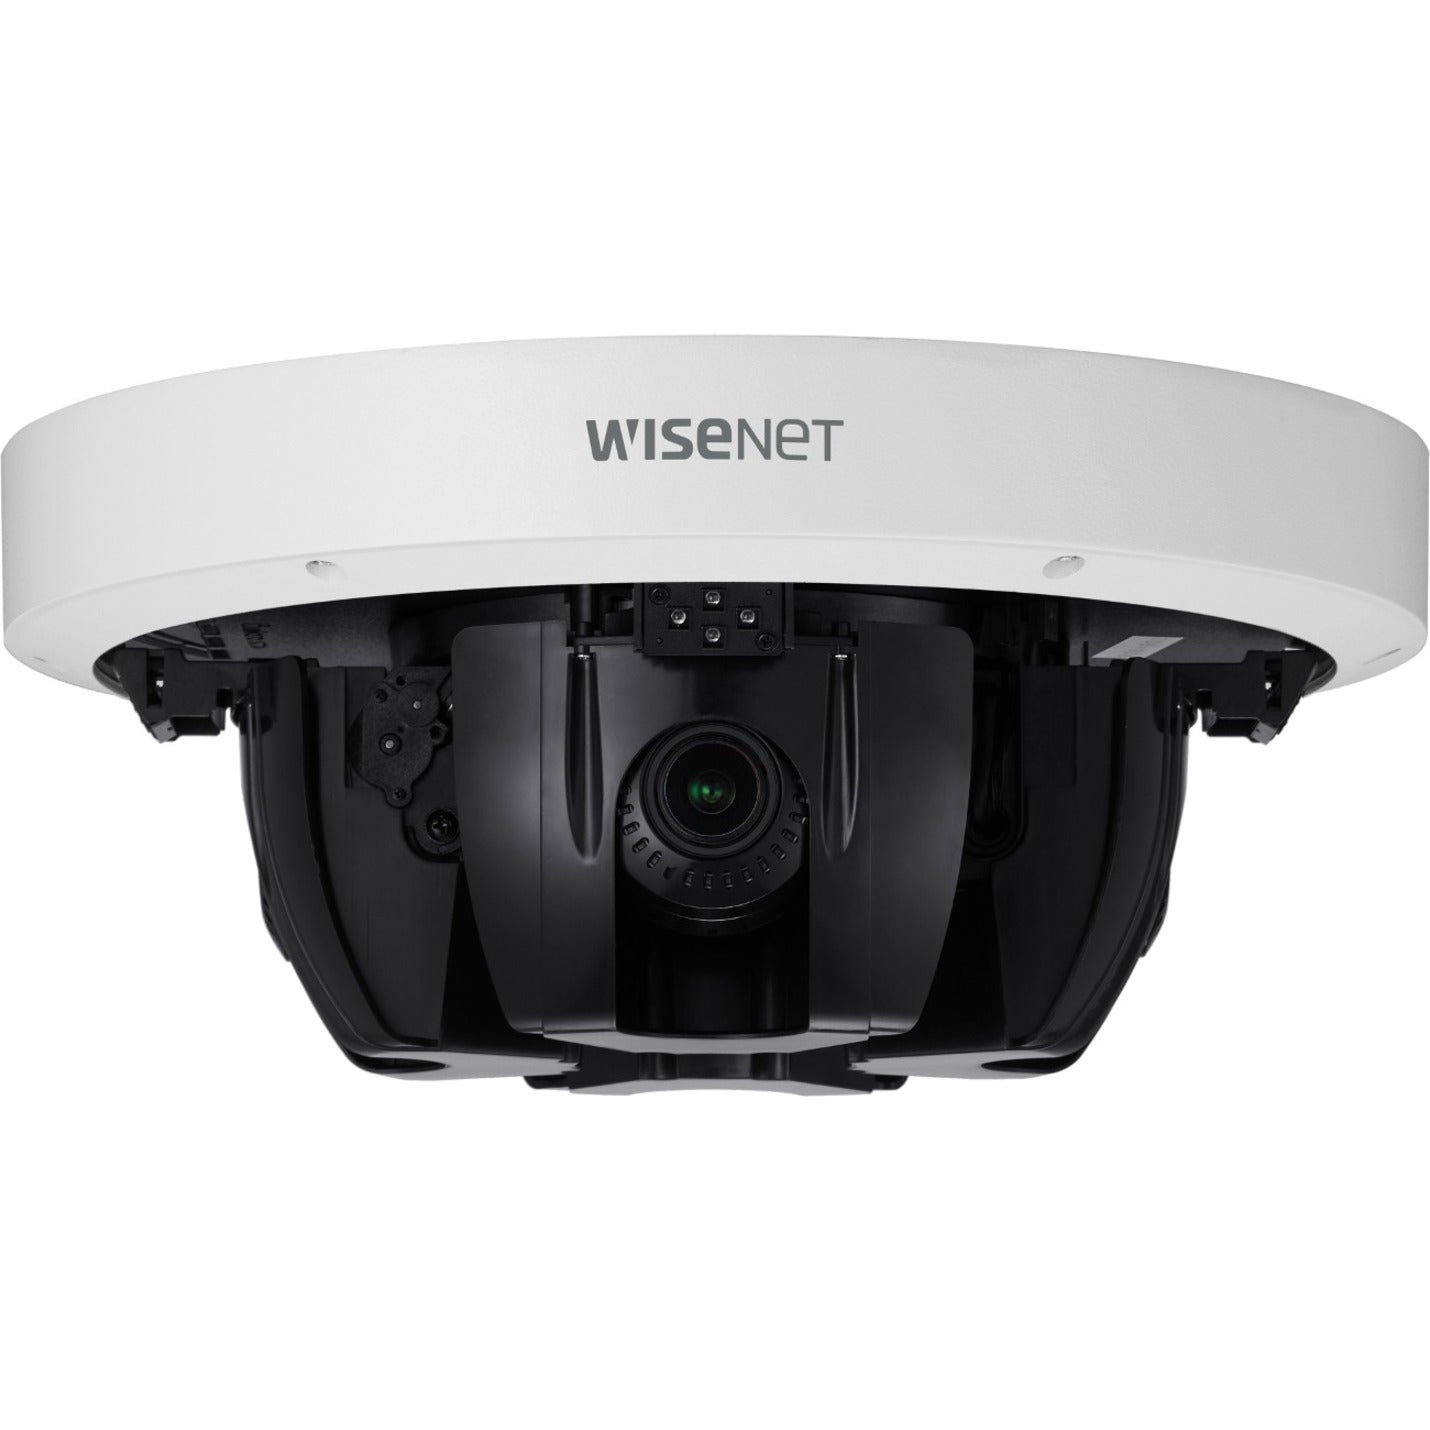 Wisenet PNM-9085RQZ1 5MP x 4CH IR PTRZ Multi-directional Camera, Varifocal Lens, 2.3x Optical Zoom, Memory Card Storage, H.265/H.264 Video Formats, 30 fps, 2560 x 1920 Resolution